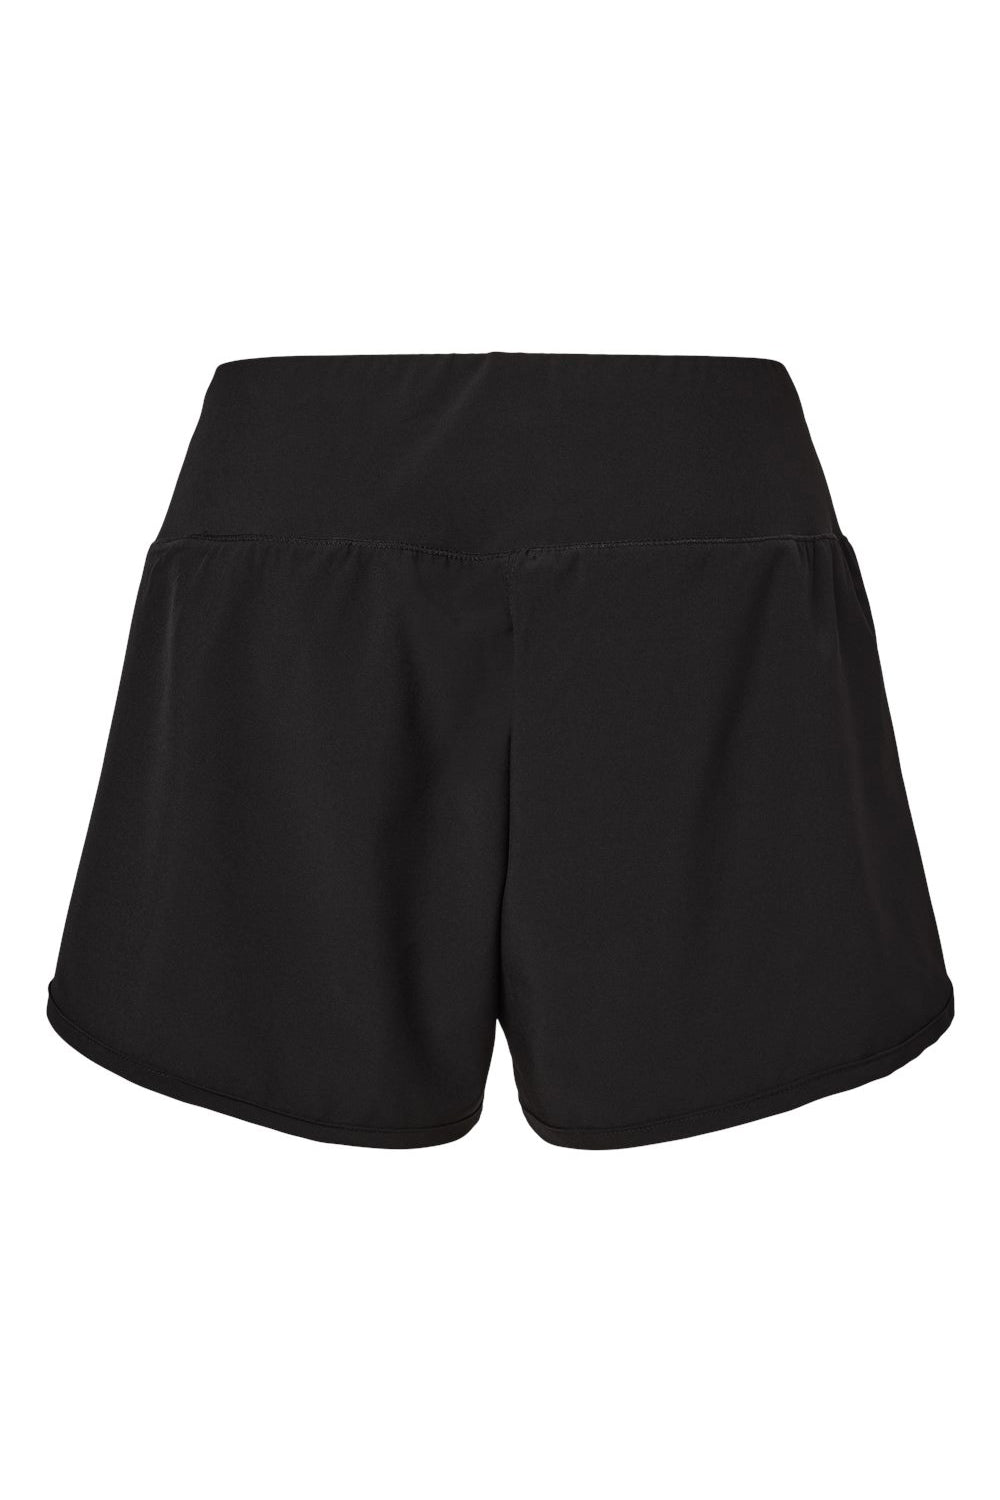 Boxercraft BW6103 Womens Stretch Woven Lined Shorts Black Flat Back